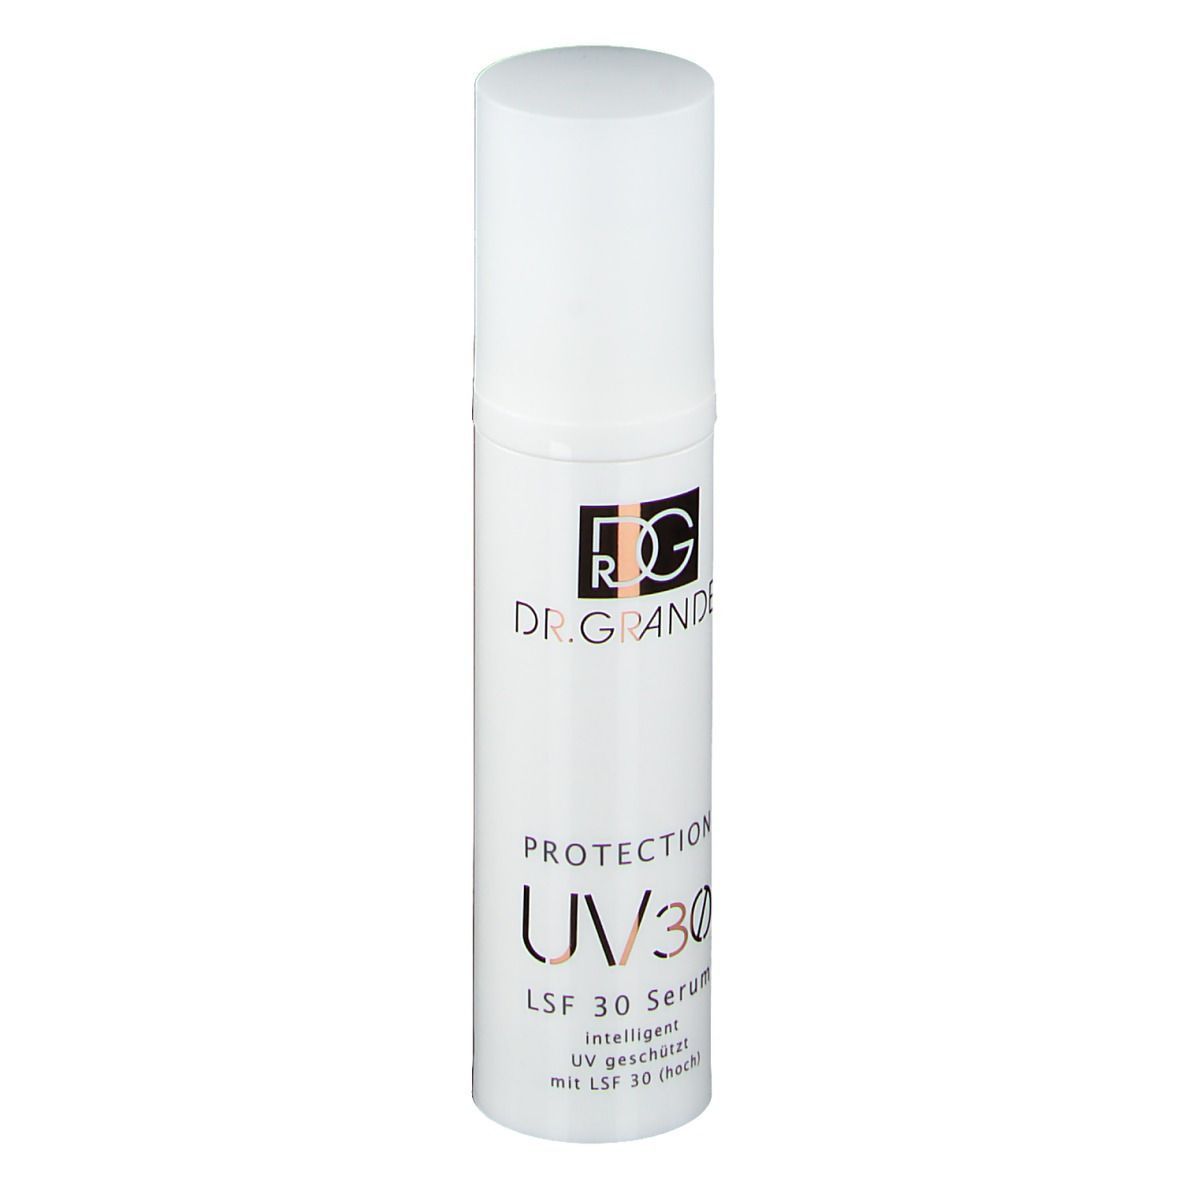 Dr. Grandel Protection UV LSF 30 Serum